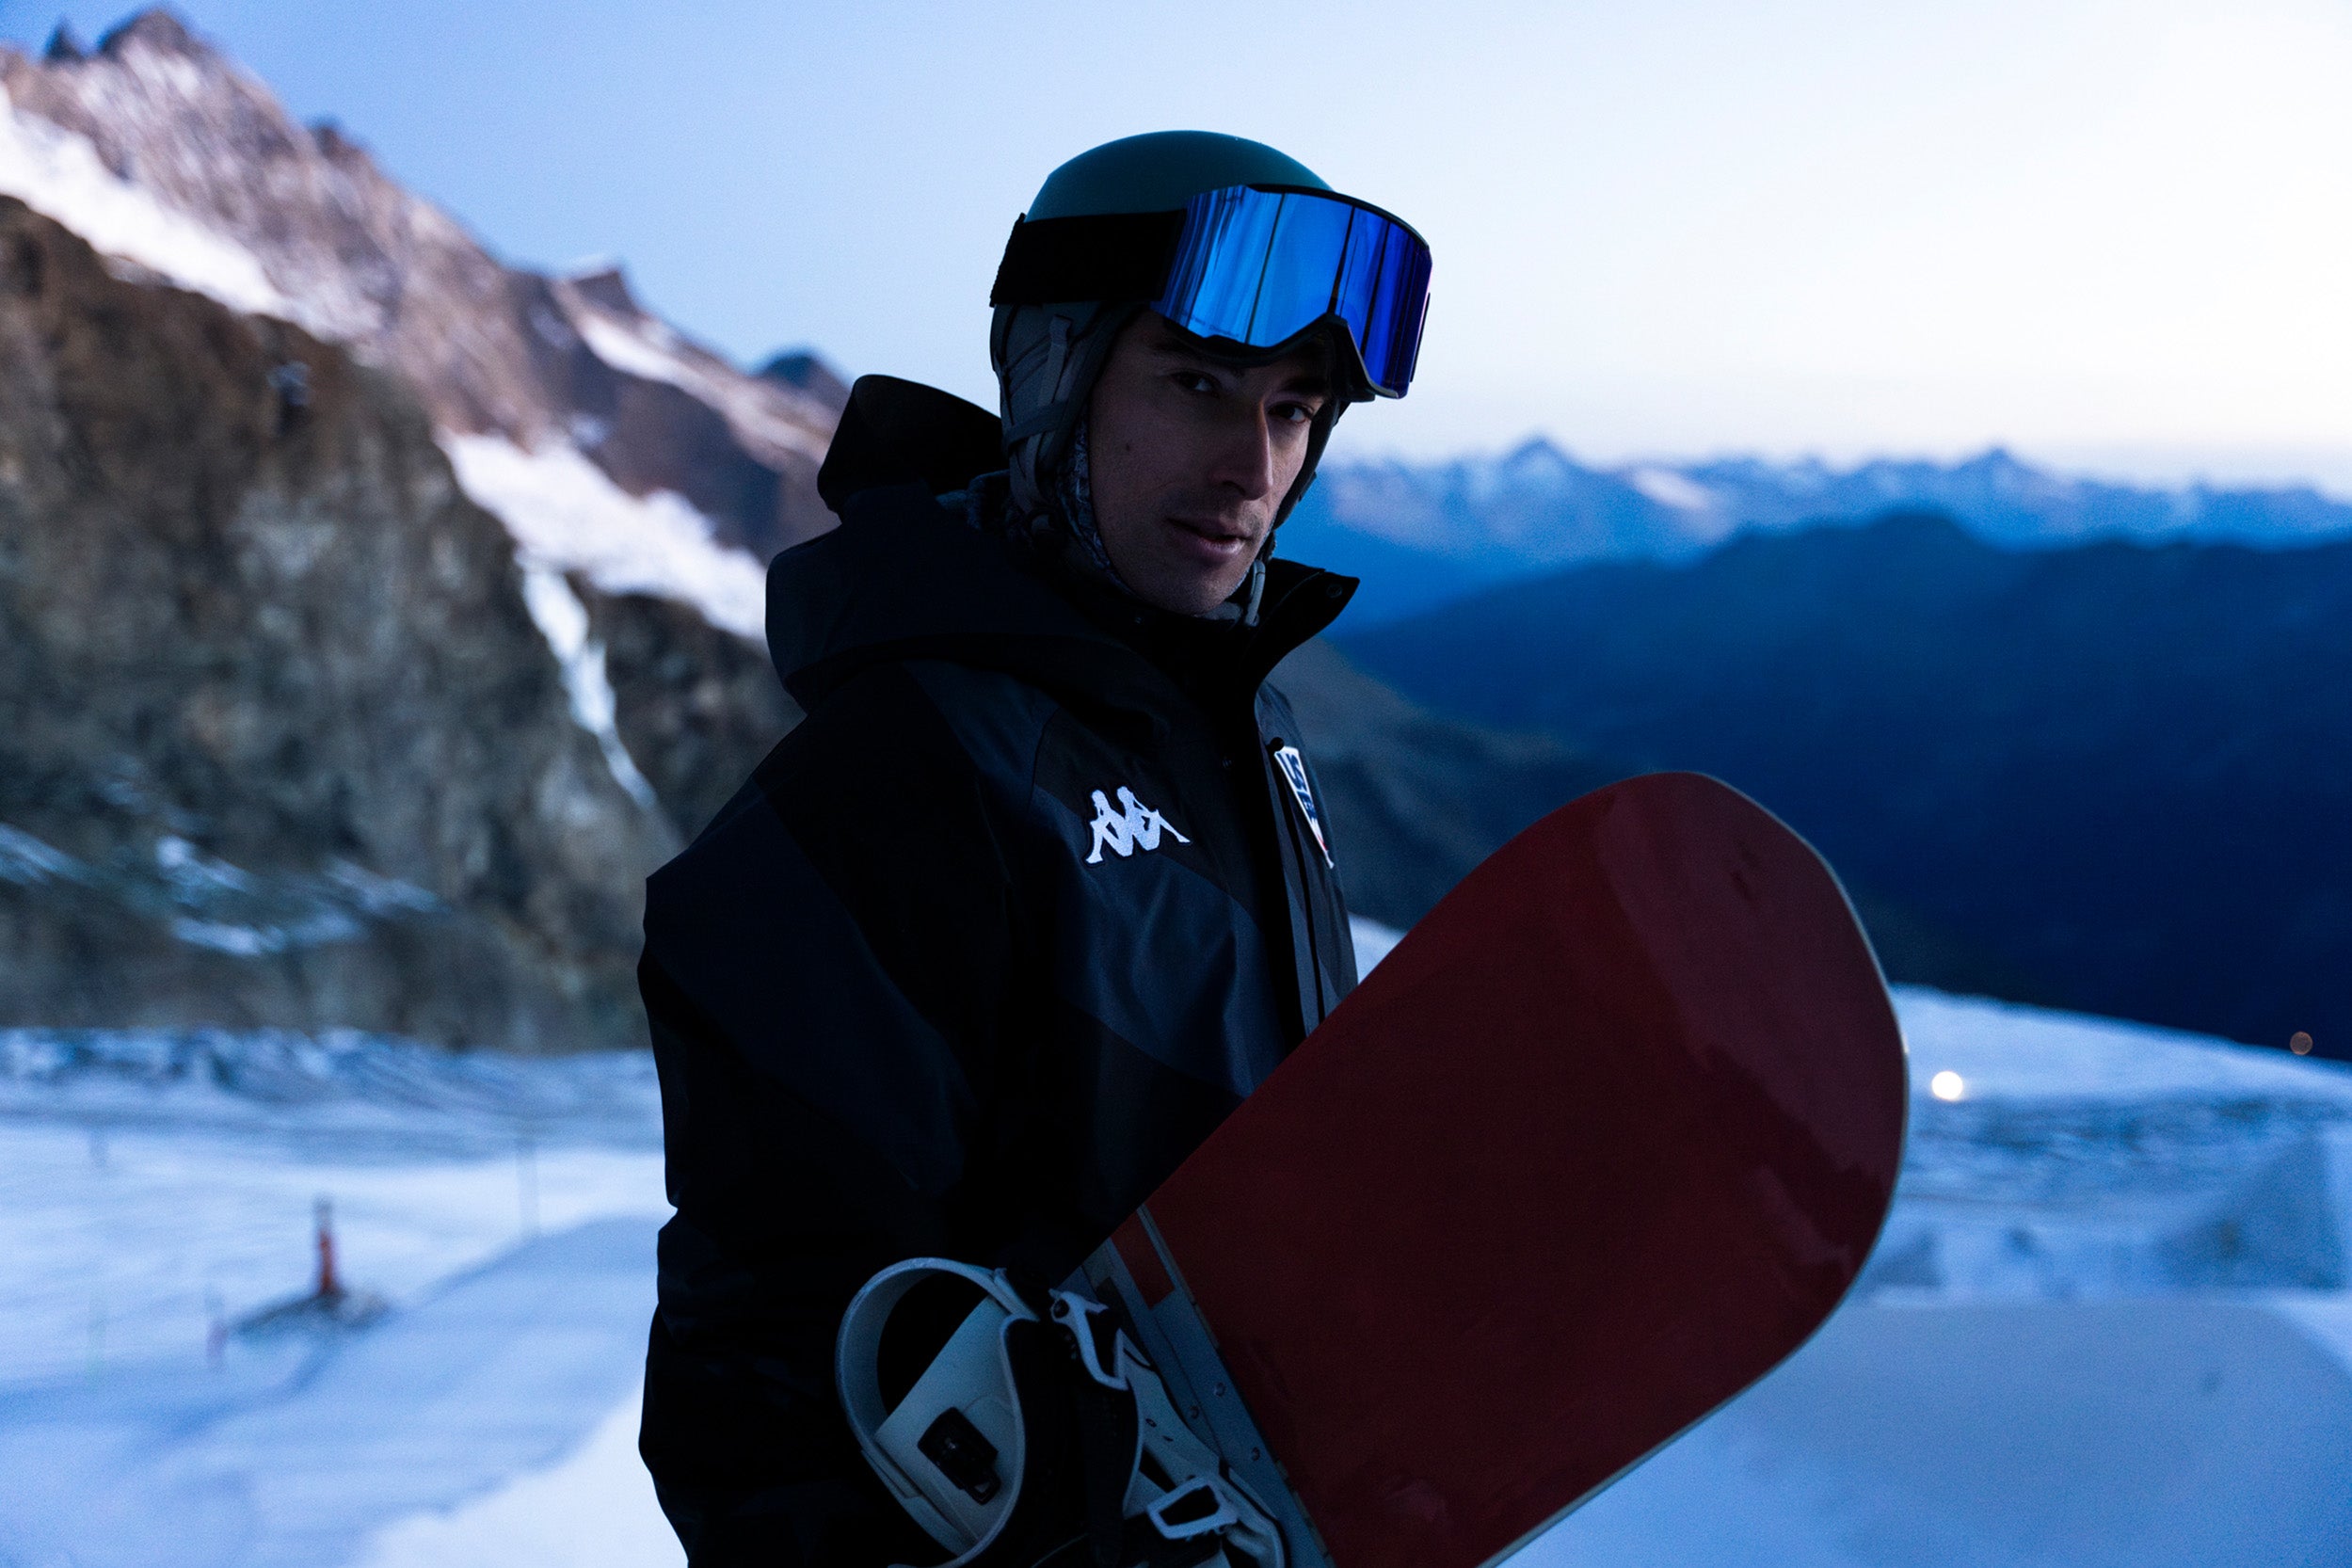 Kappa is the Official Partner Ski and U.S. – of USA Team the Kappa Snowboard